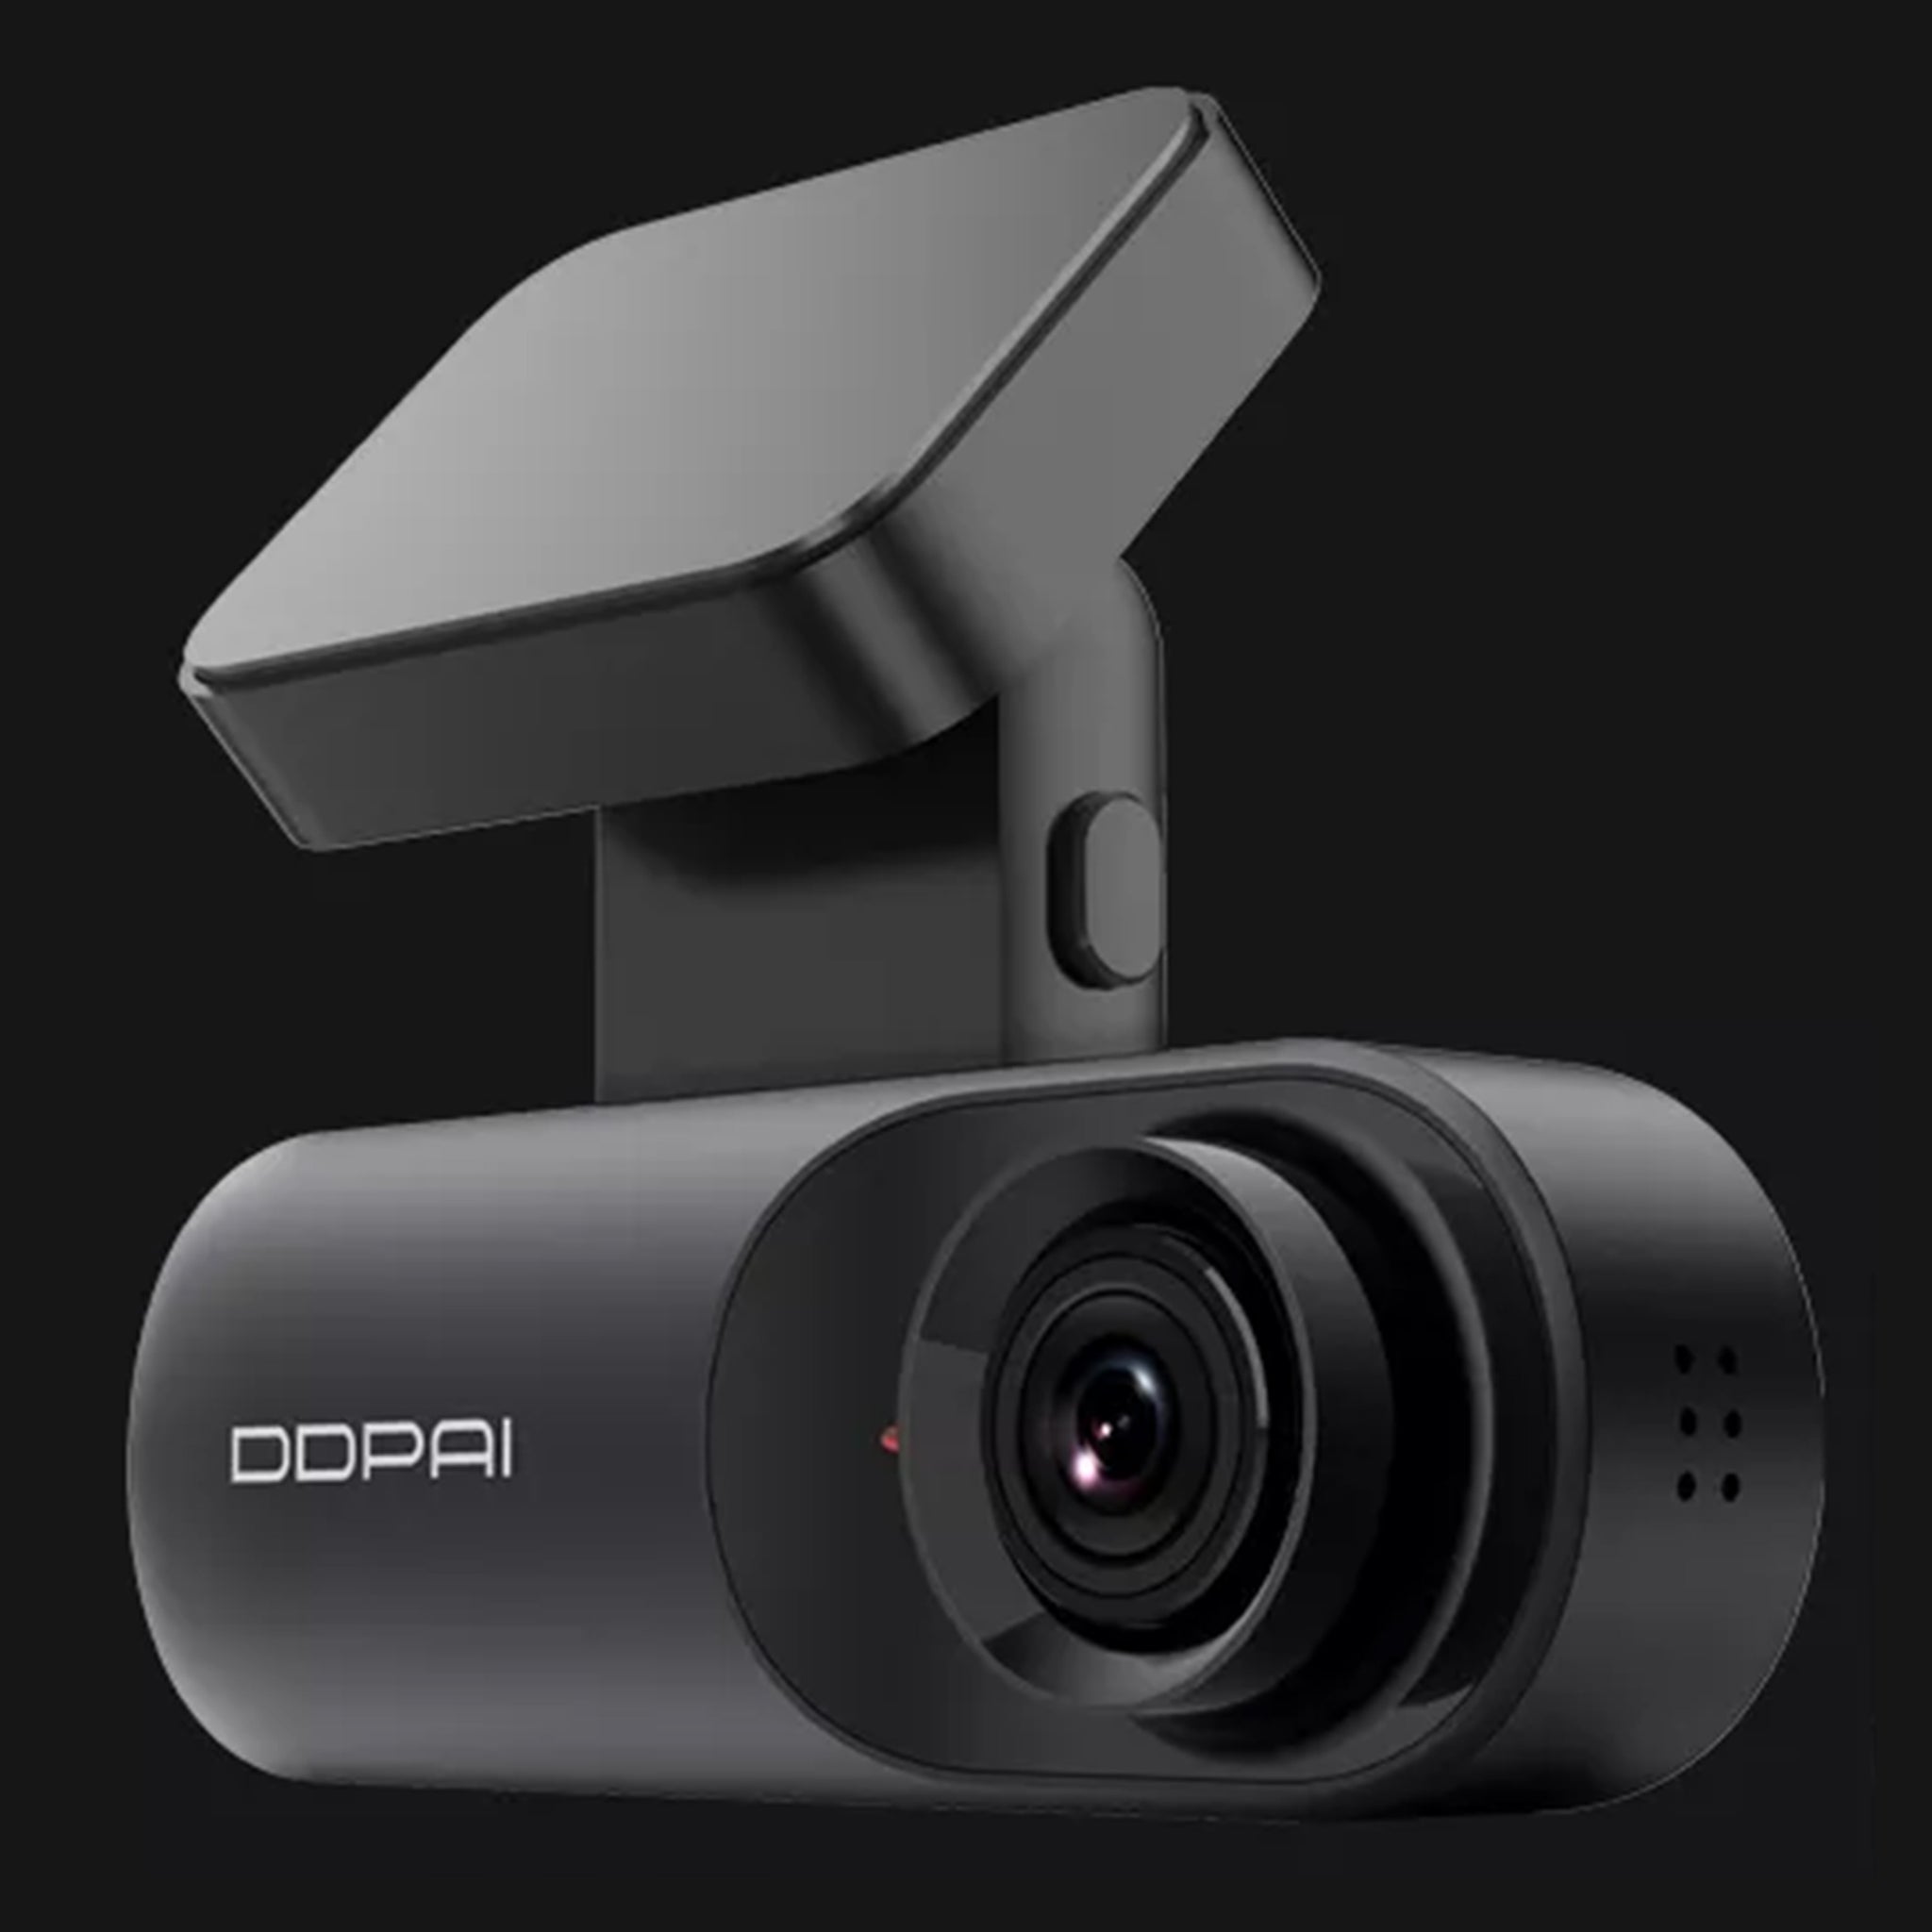 DDPAI Mola N3 1600P 2K HD Car DVR Camera GPS Wifi Smart Connect Car Dash Cam  Recorder